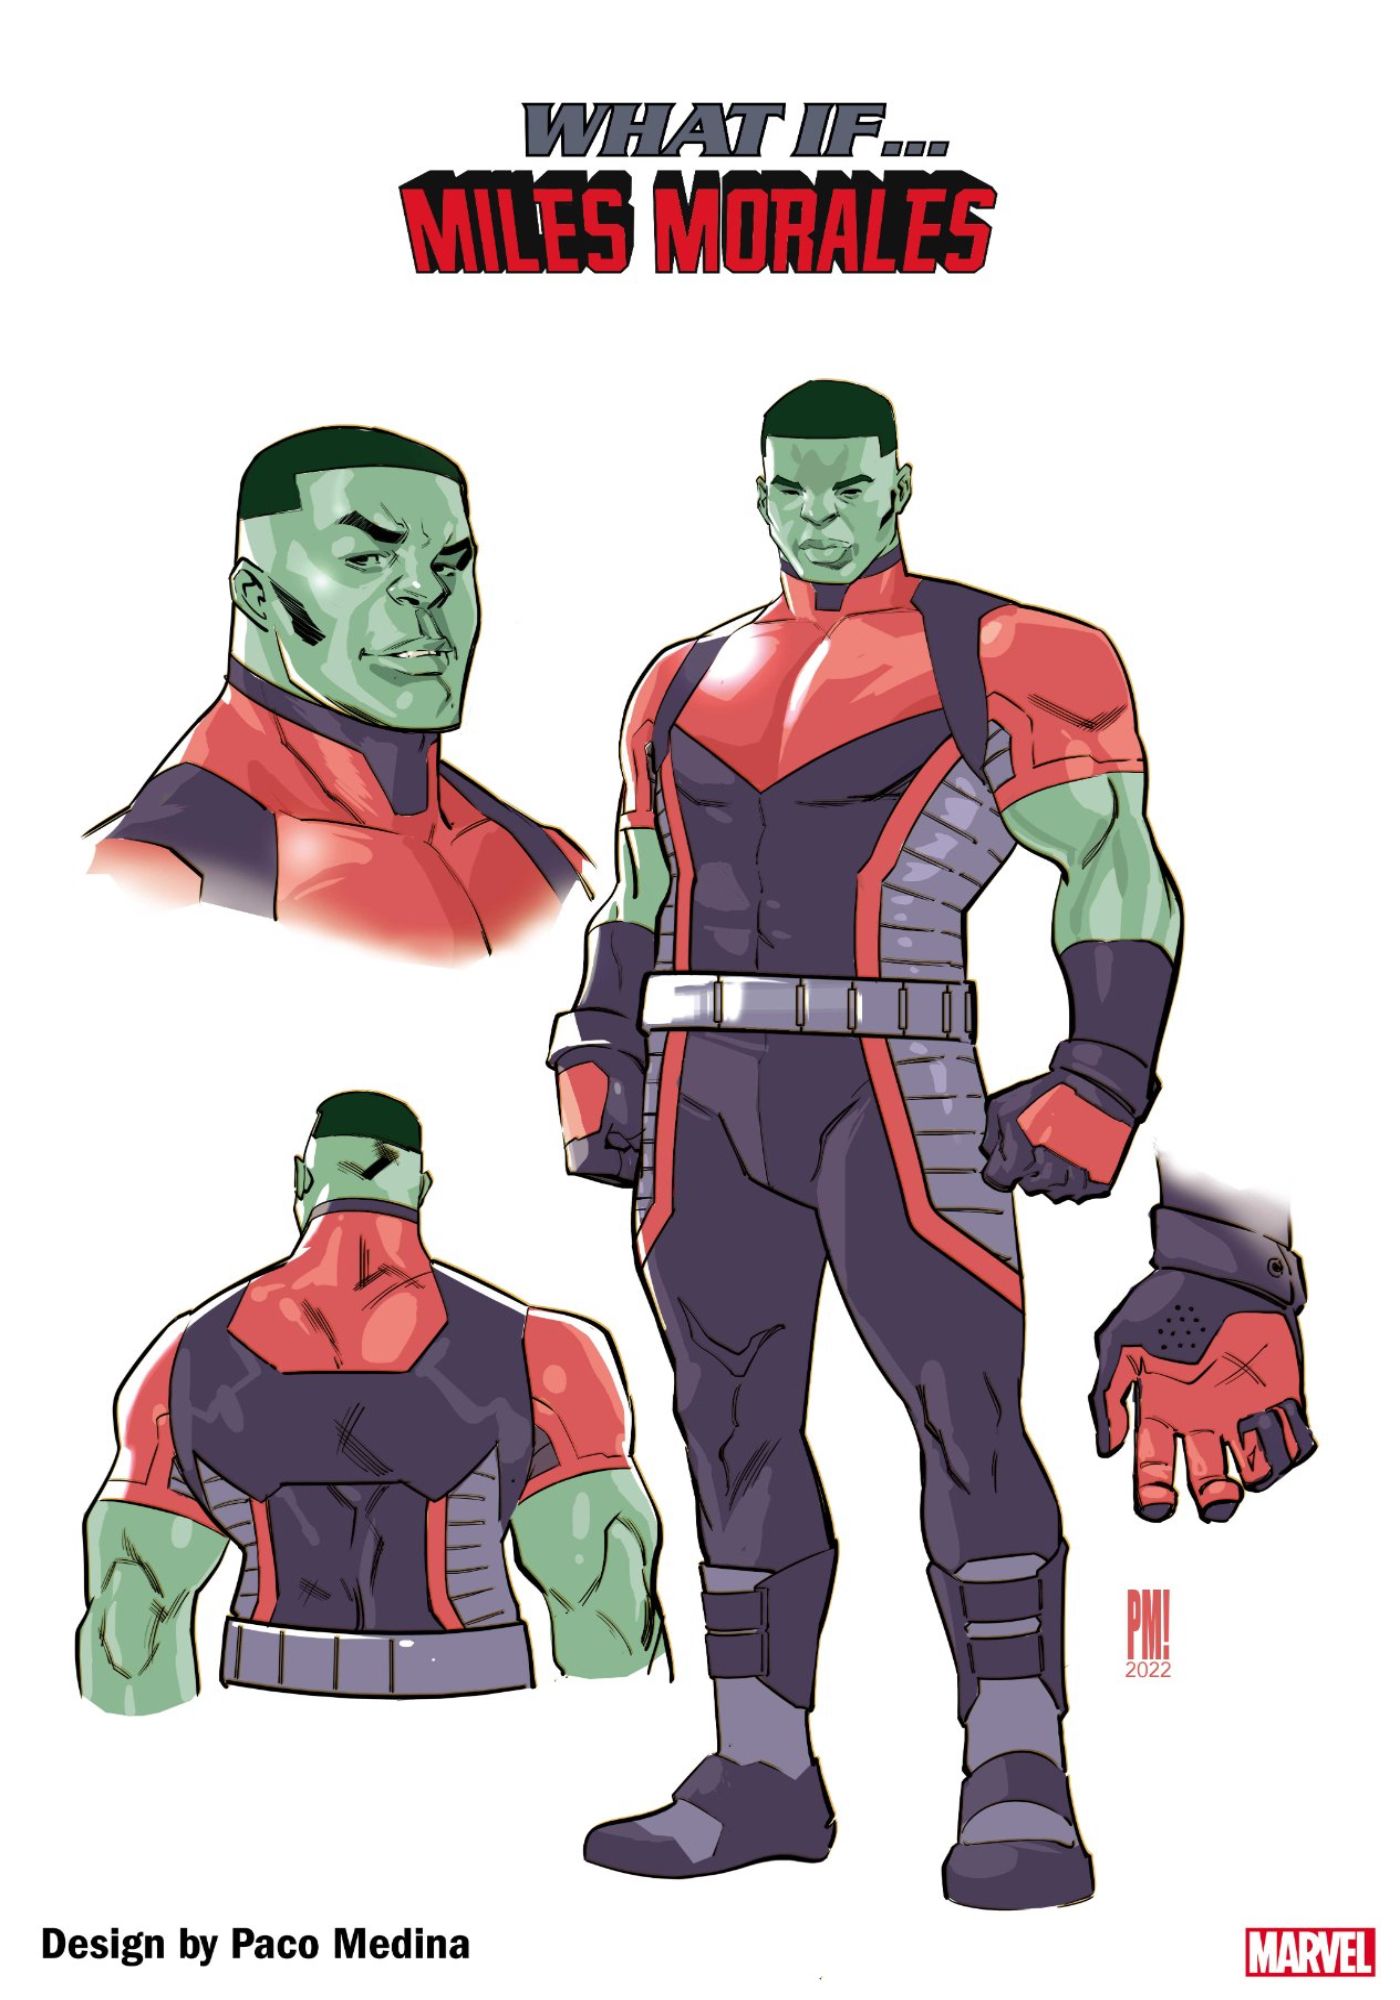 Miles Morales Becomes The Hulk